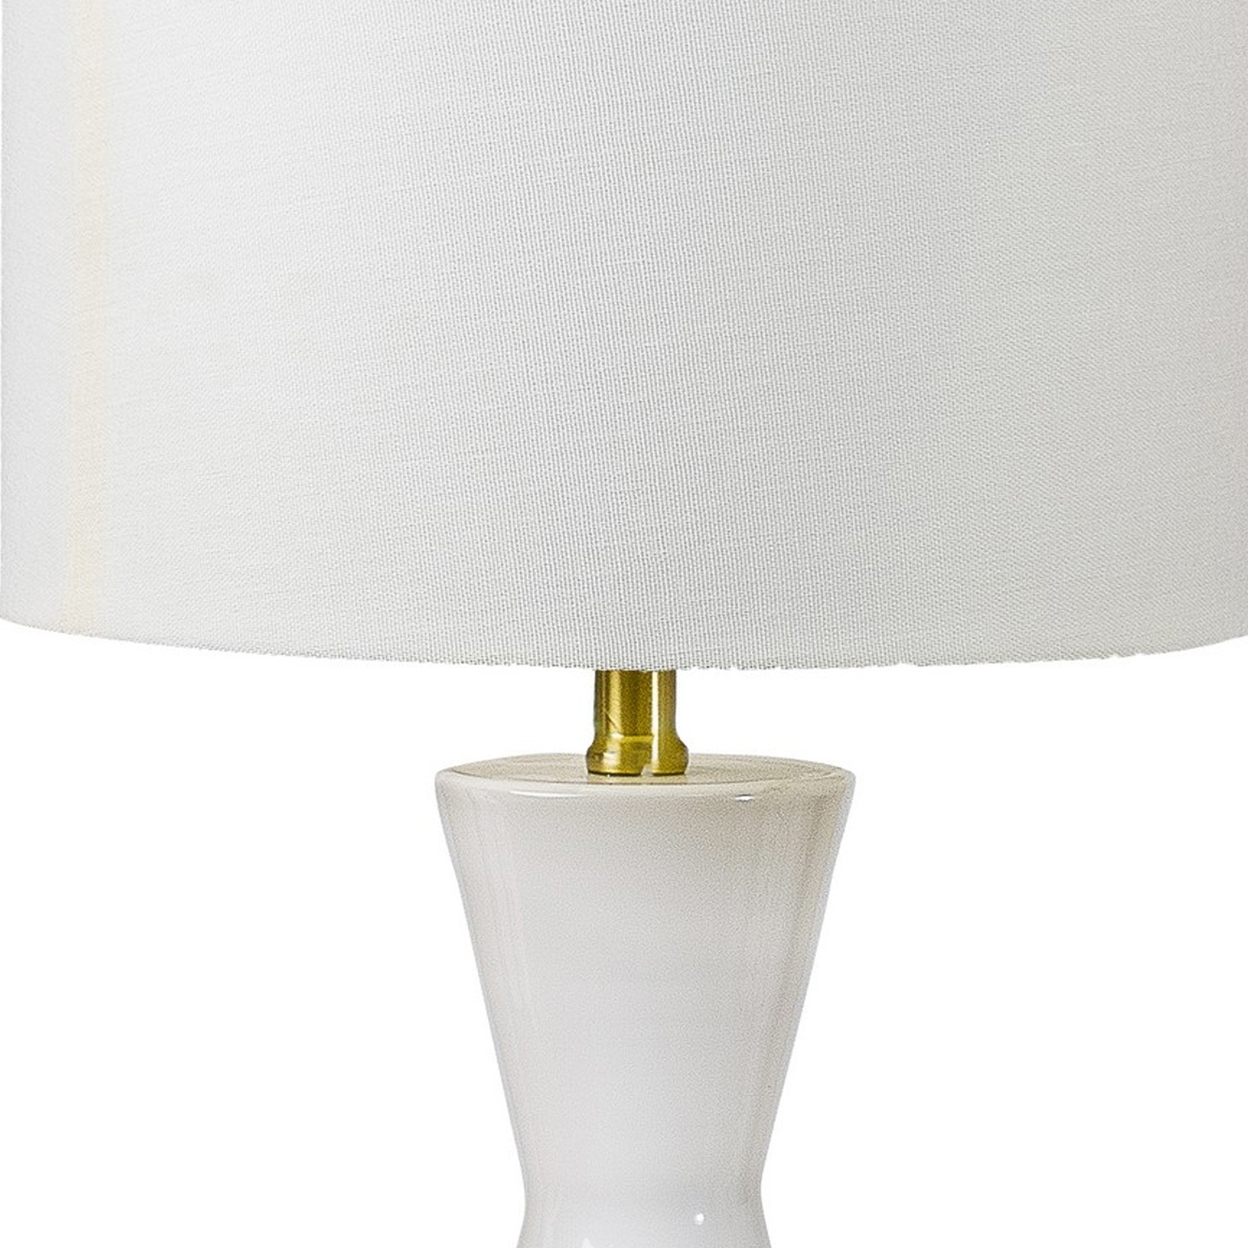 Elma 24 Inch Table Lamp Set Of 2, Hourglass Stand, Gold Trim, Glass, White -Saltoro Sherpi